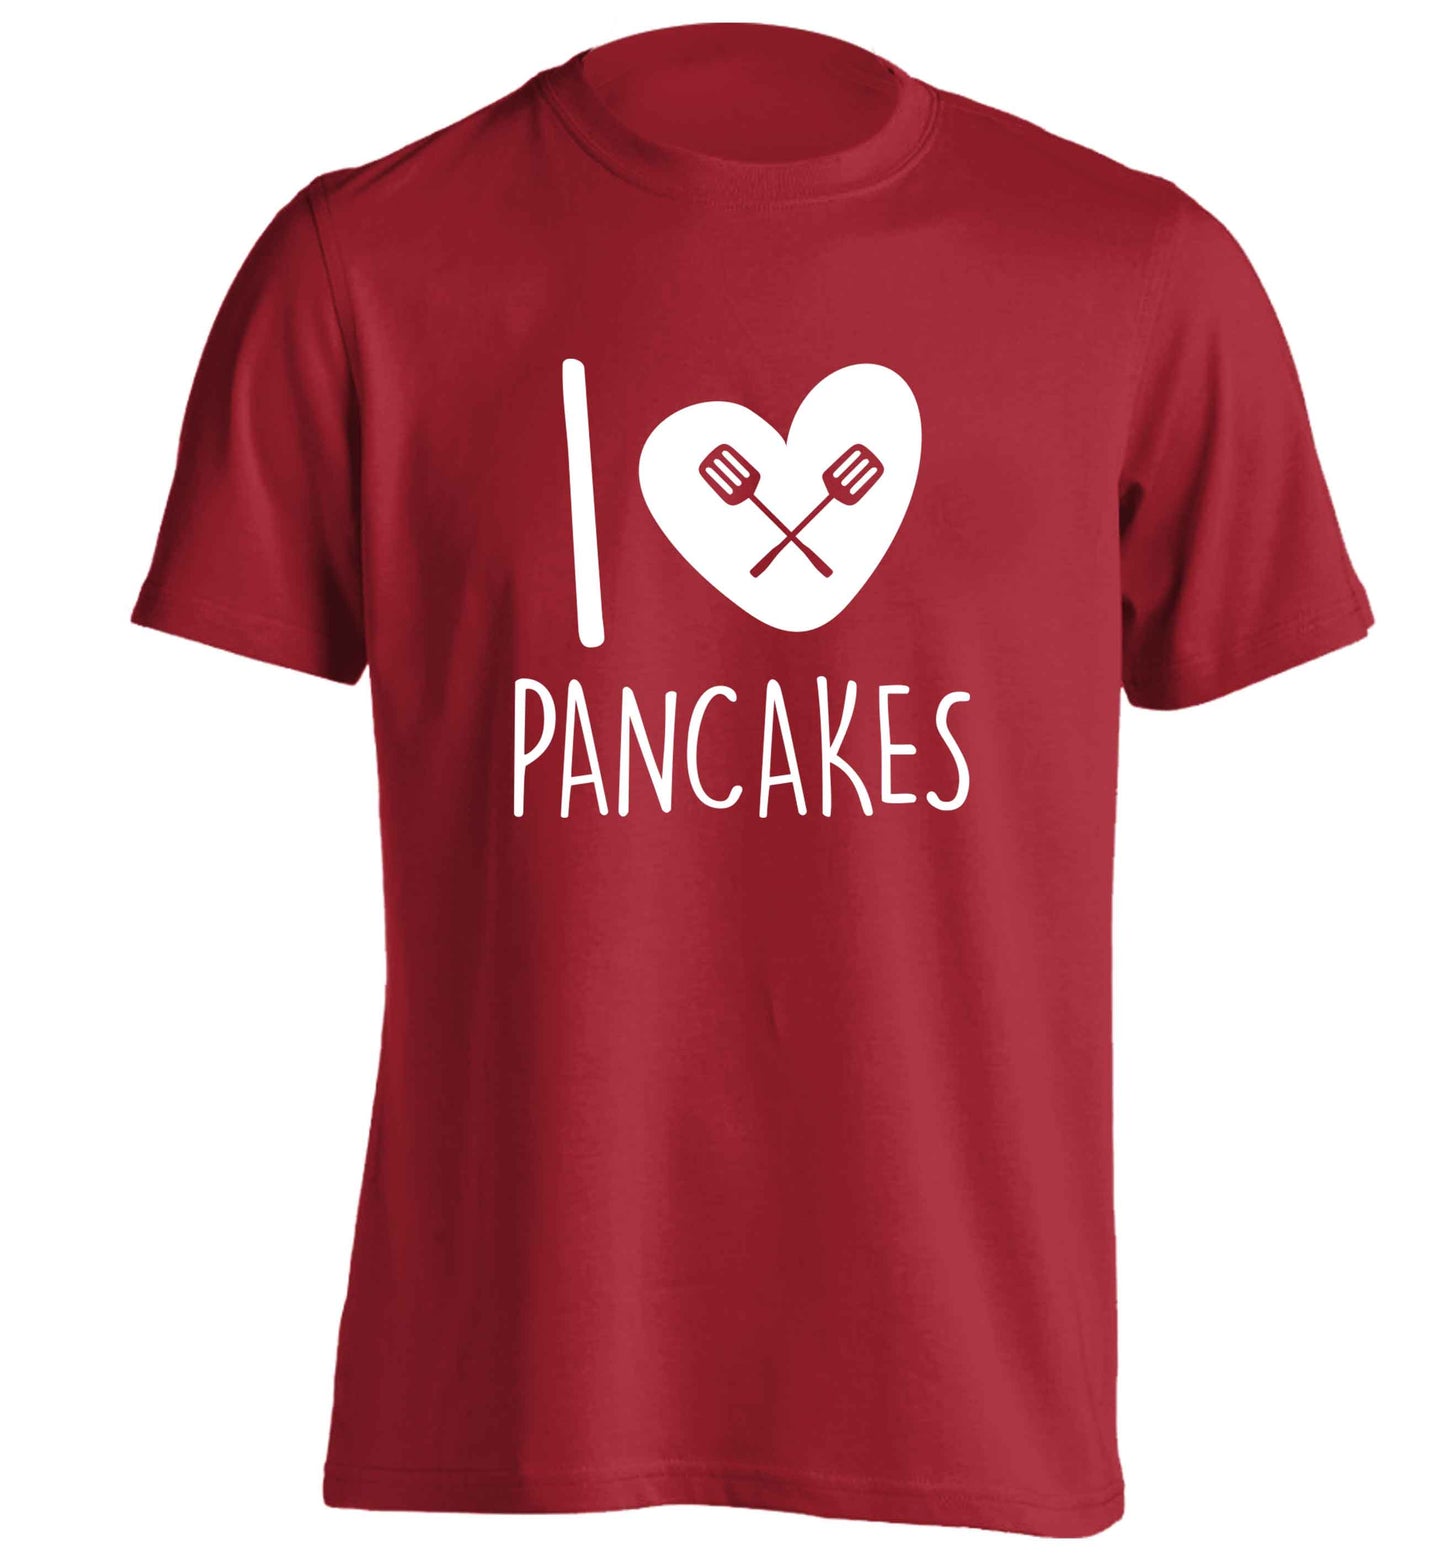 I love pancakes adults unisex red Tshirt 2XL